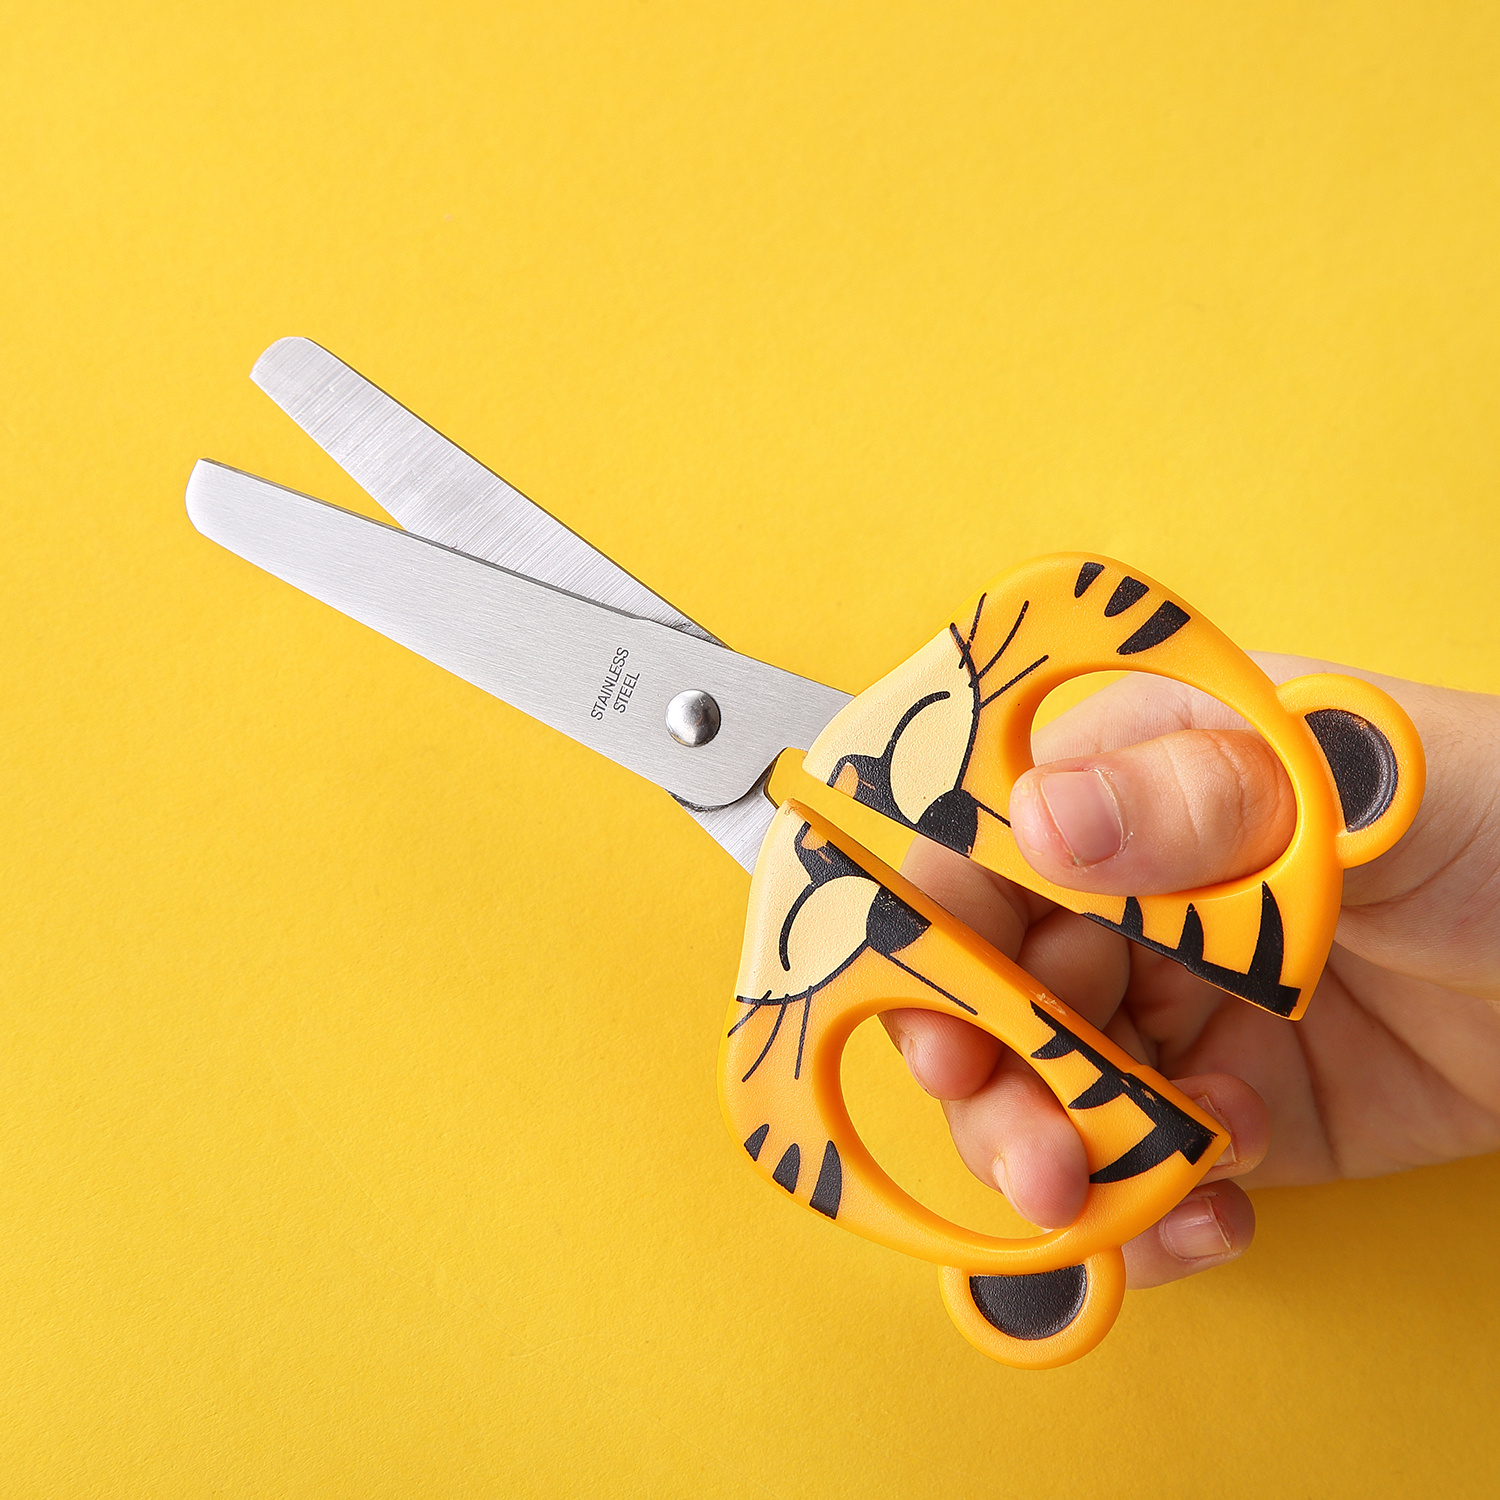 qucoqpe Kawaii Scissors for School Kids, Cute Animal Designs